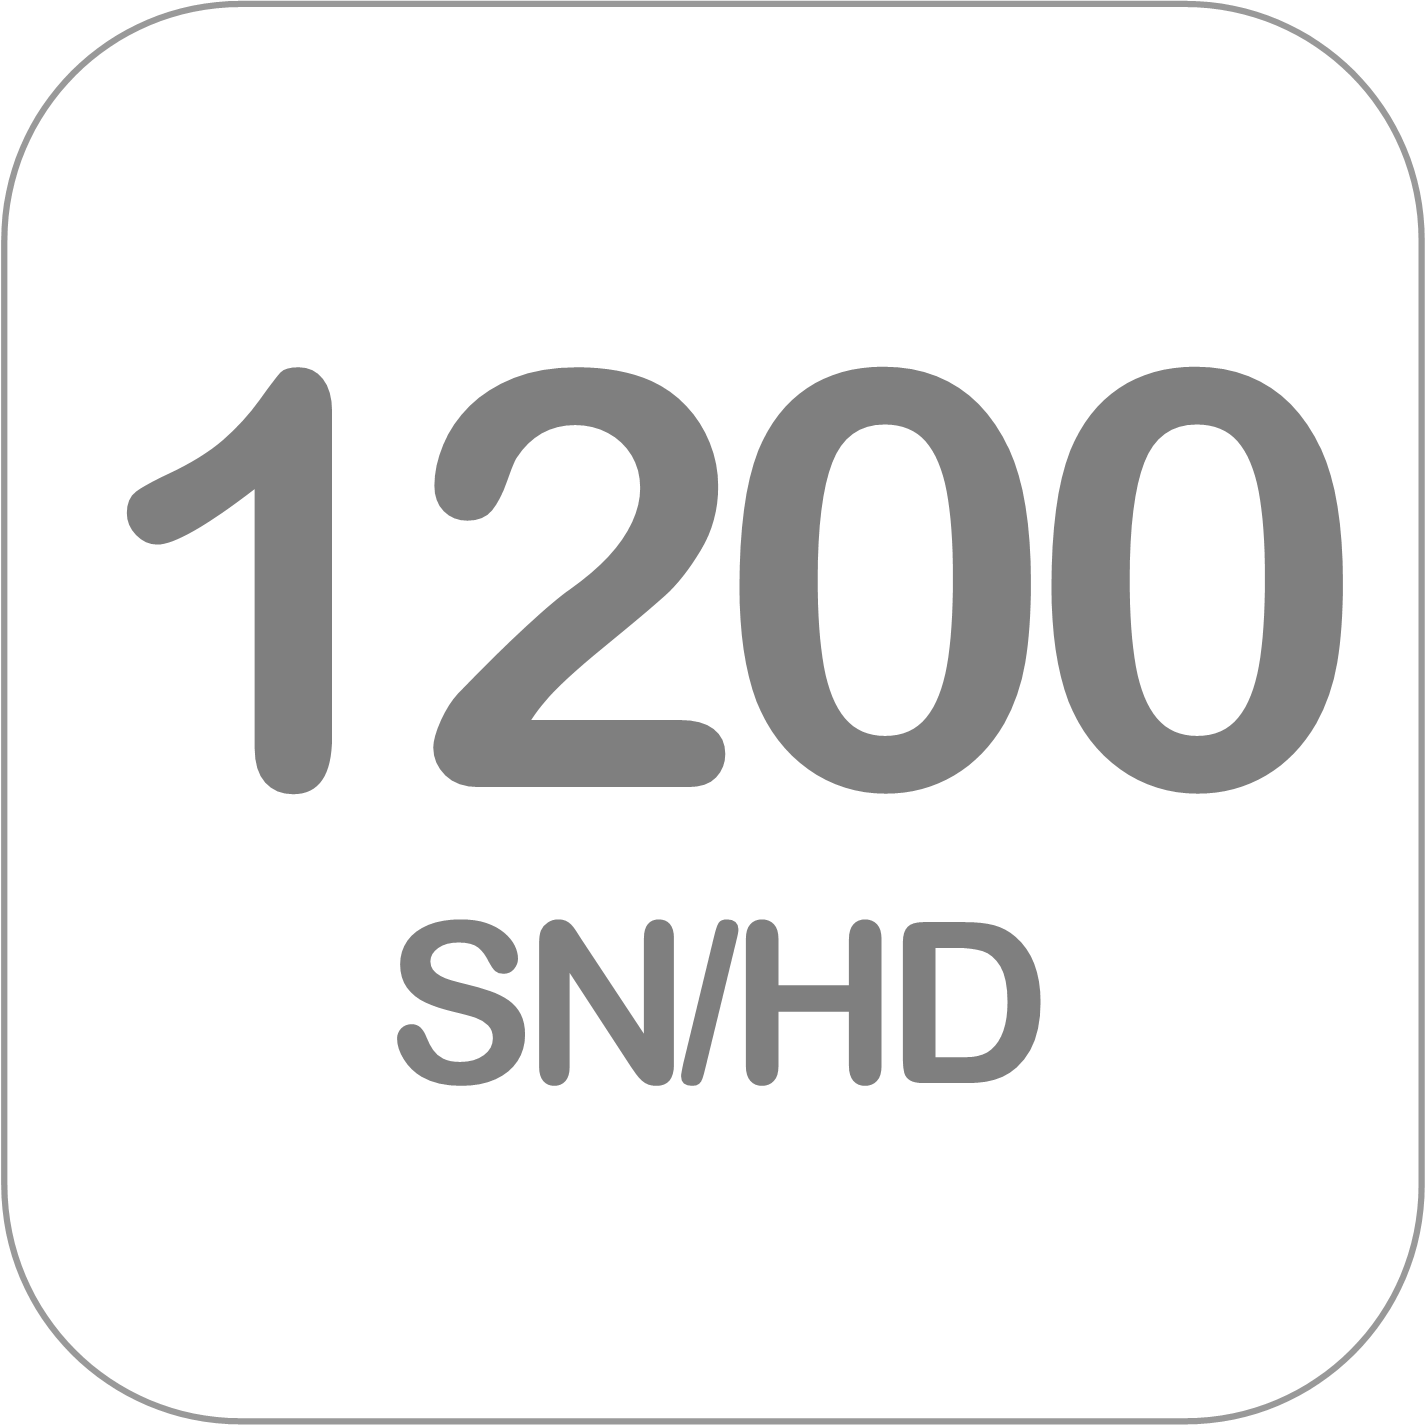 Volquete 1200 SN/HD